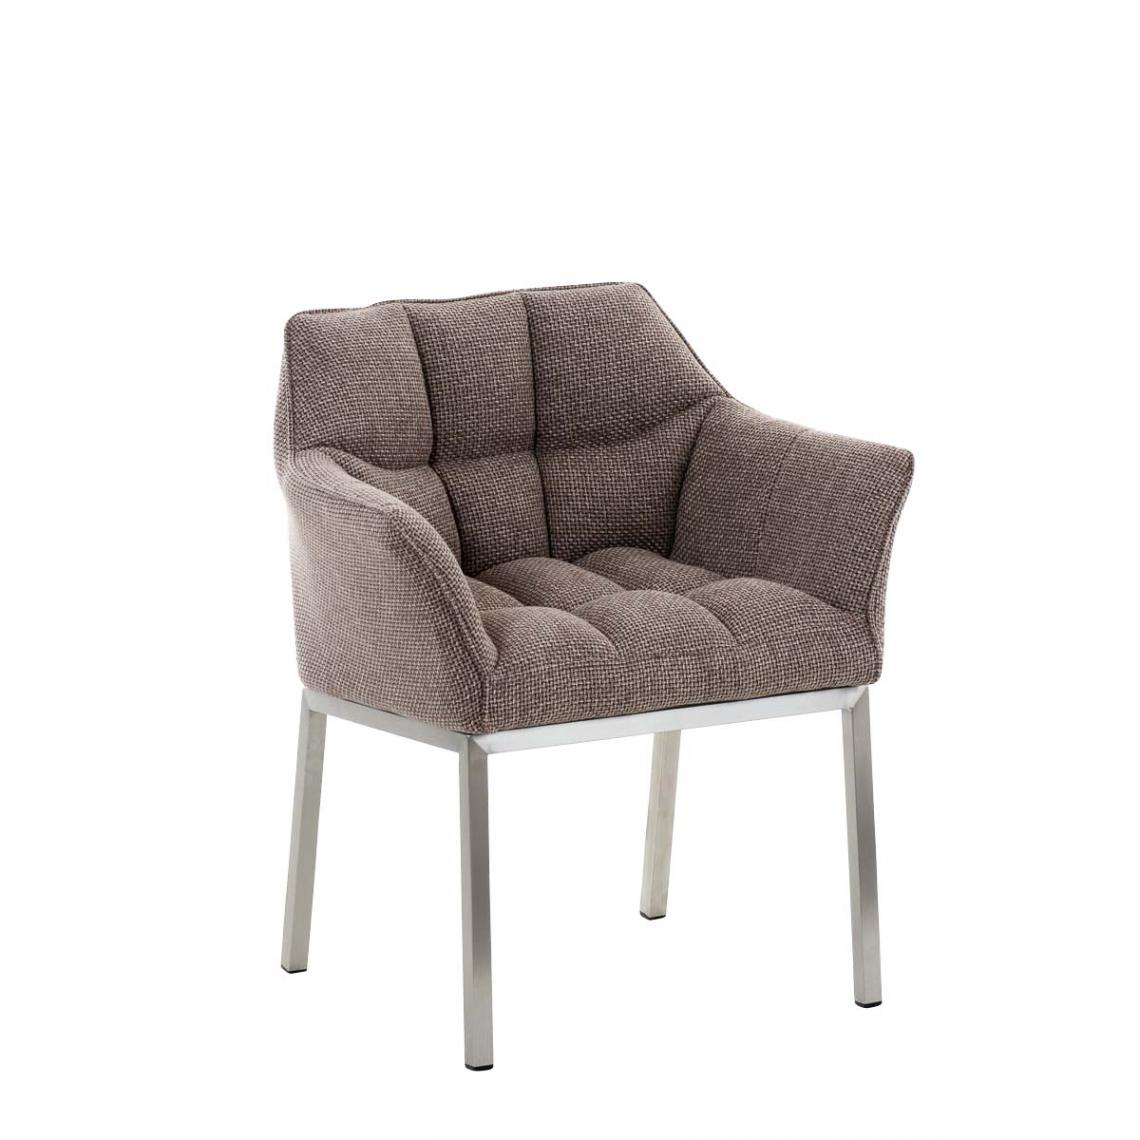 Icaverne - Moderne Chaise de salle à manger edition Suva E tissu couleur brun terra - Chaises